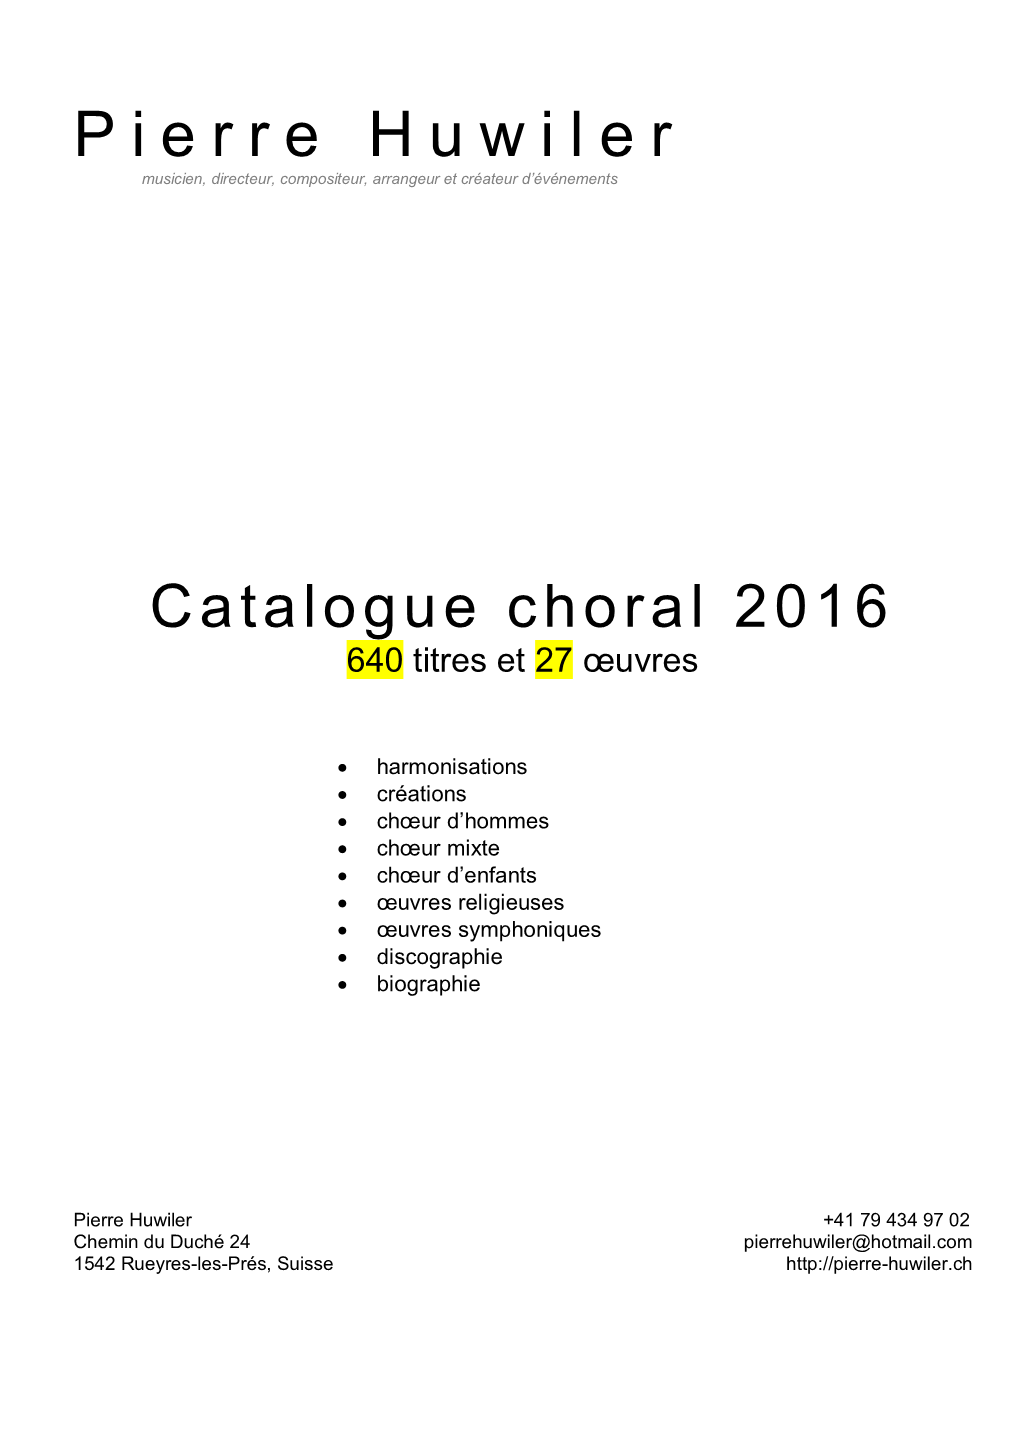 Catalogue Choral 2013 Pierre Huwiler